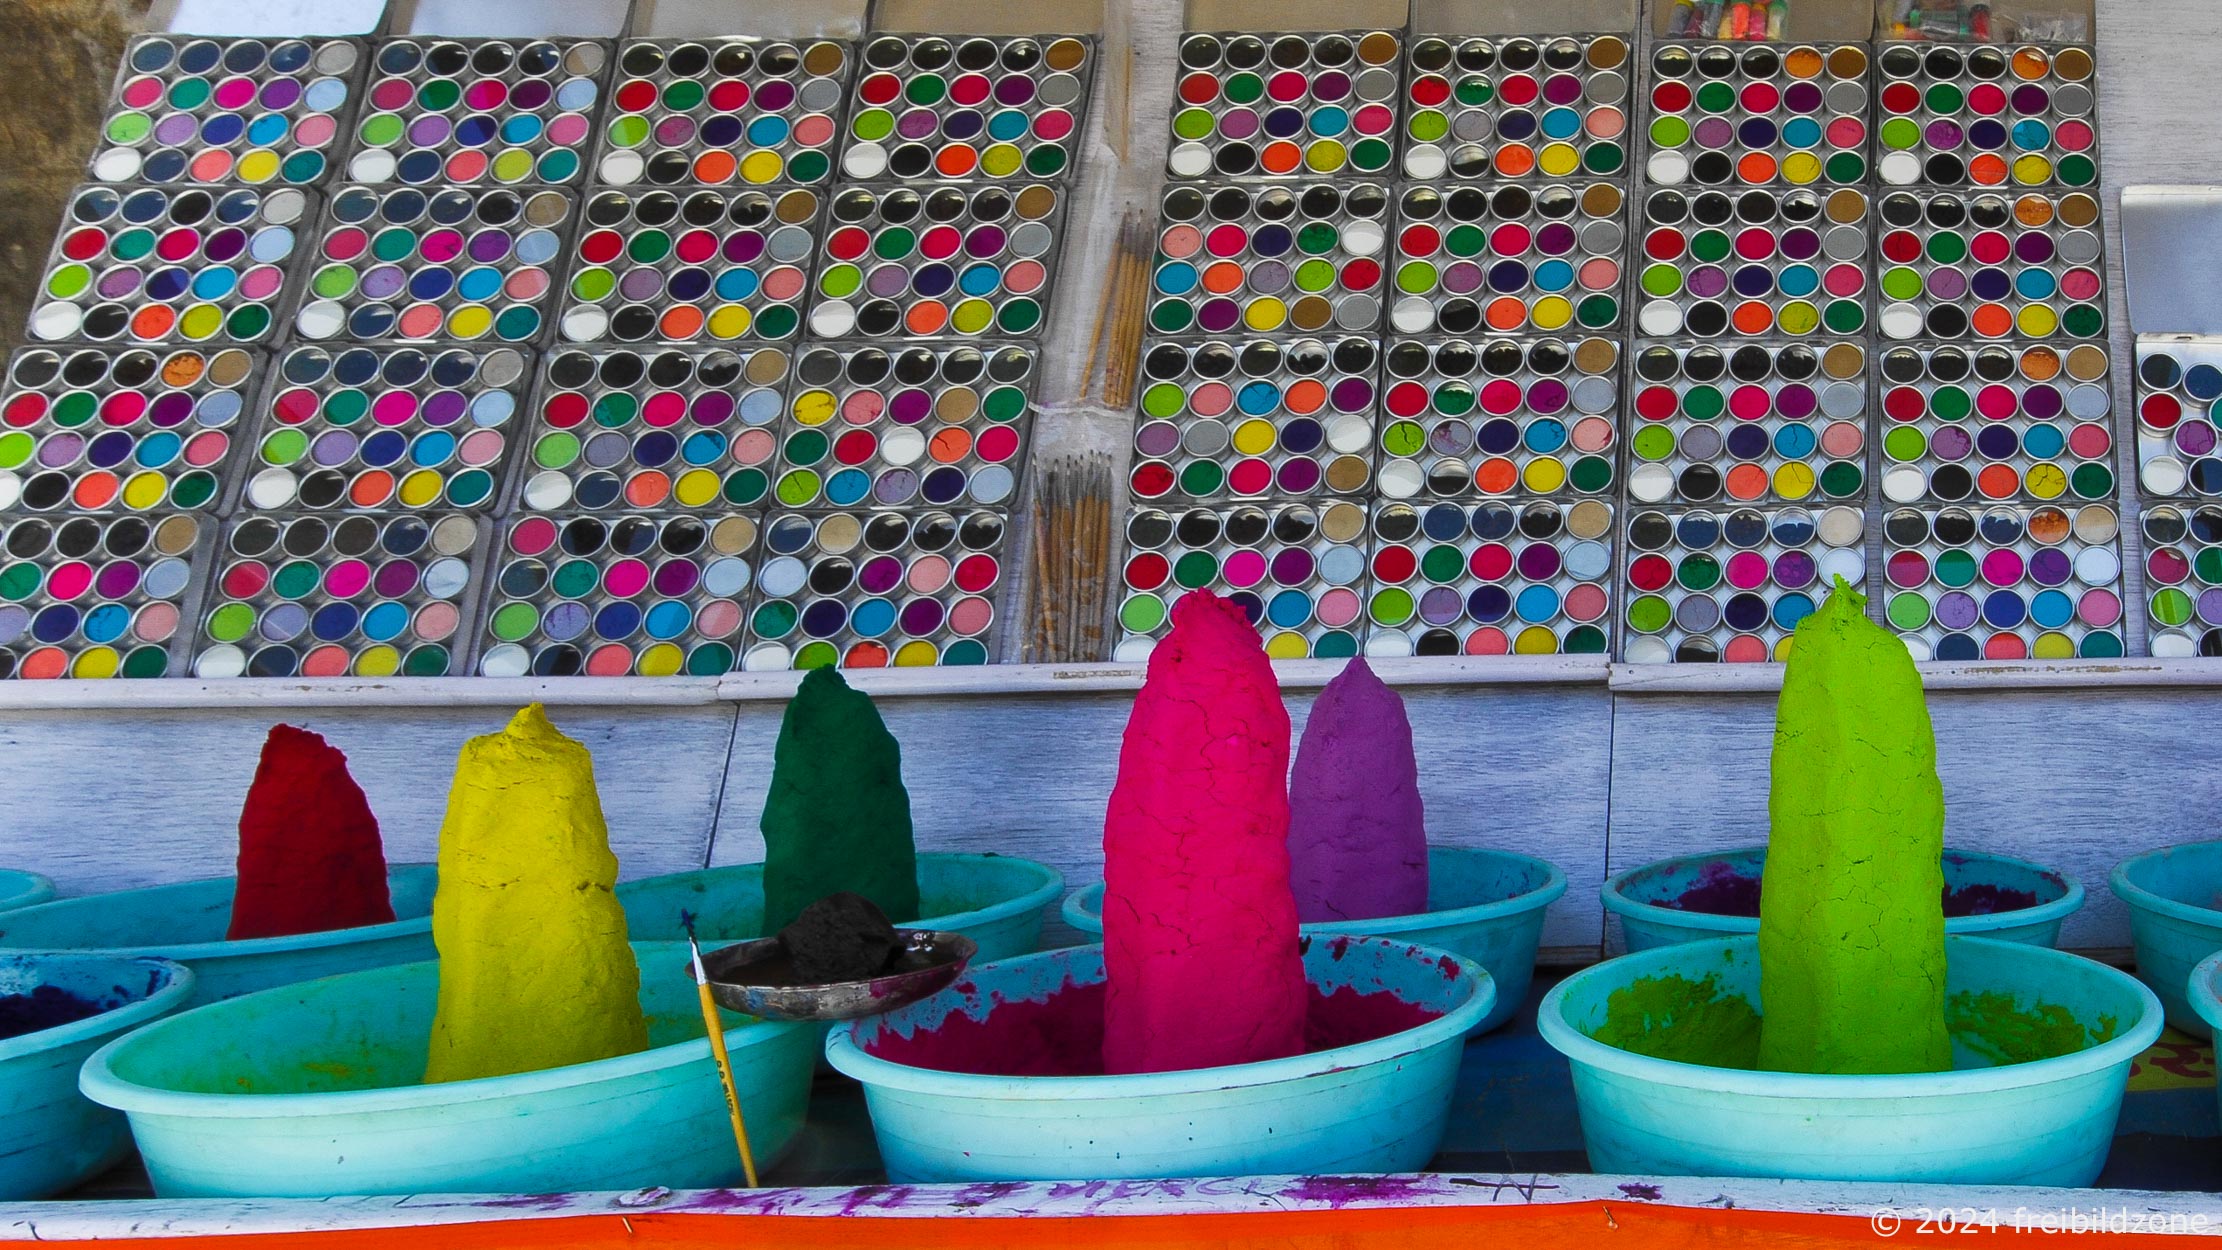 Gulal phalli and powder in little jars, Pushkar, Rajasthan, India